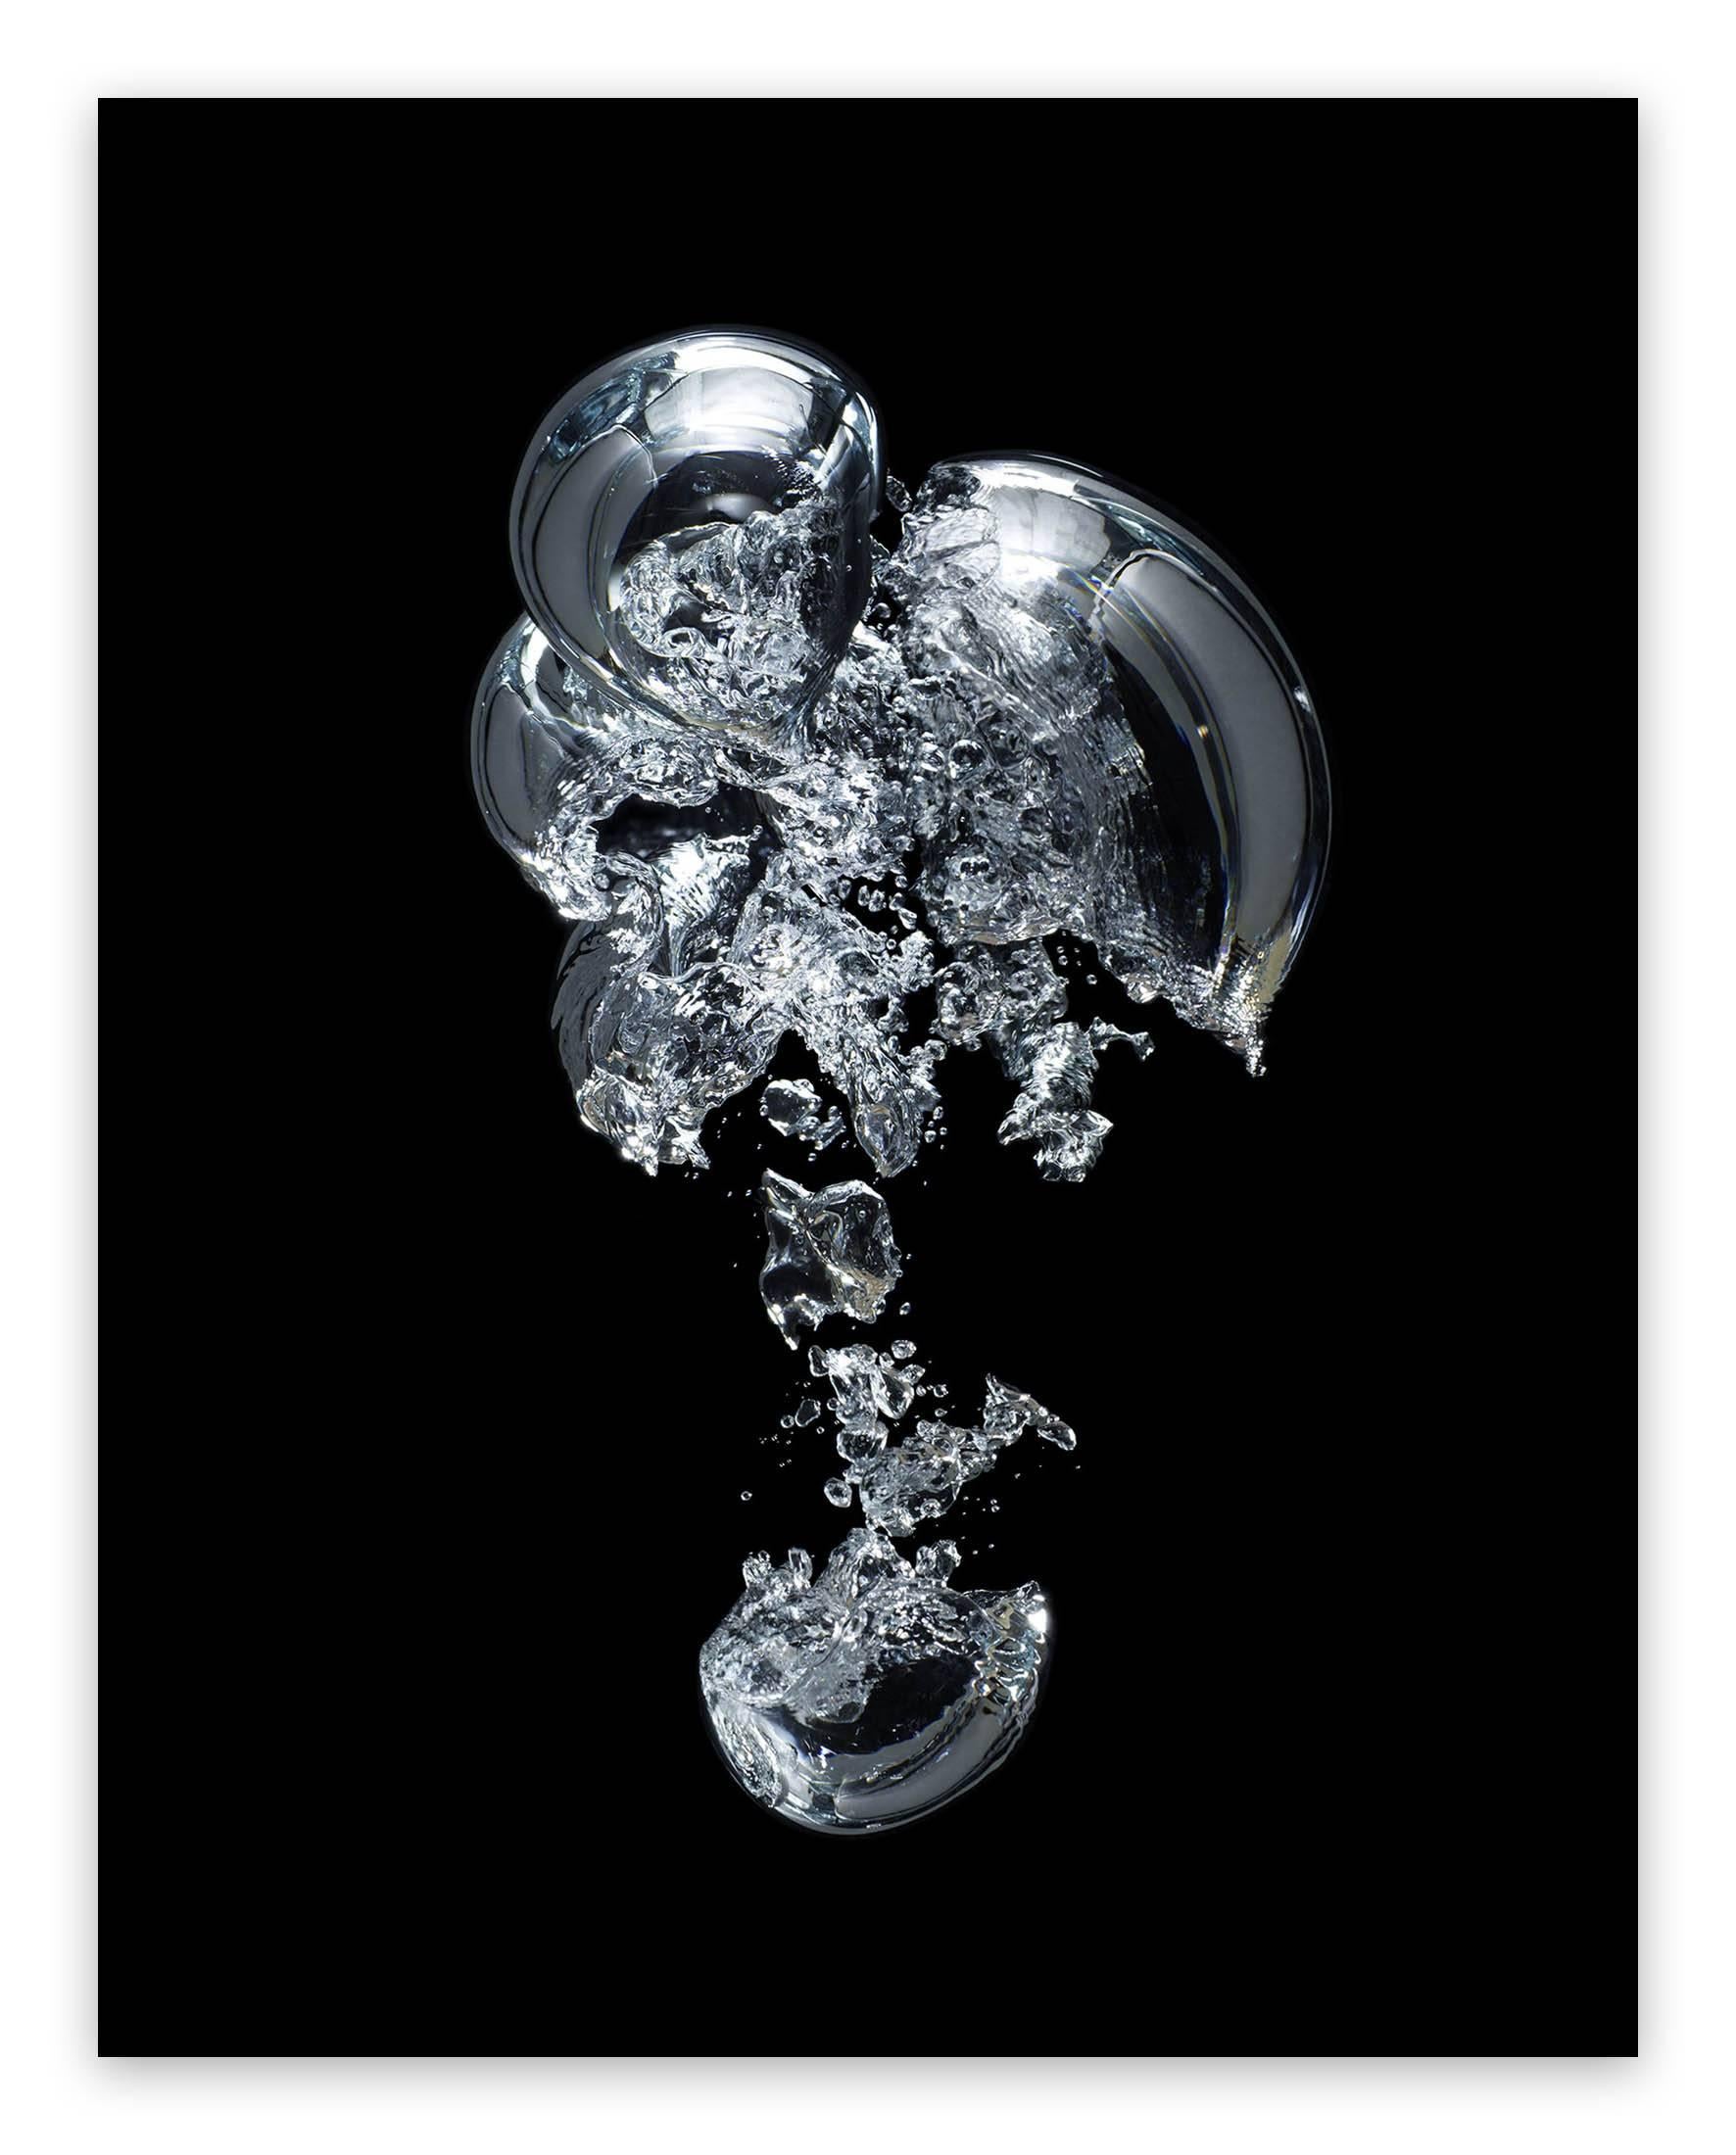 Abstract Photograph Seb Janiak - Gravity Bulle d'air 01  (Photographie abstraite)